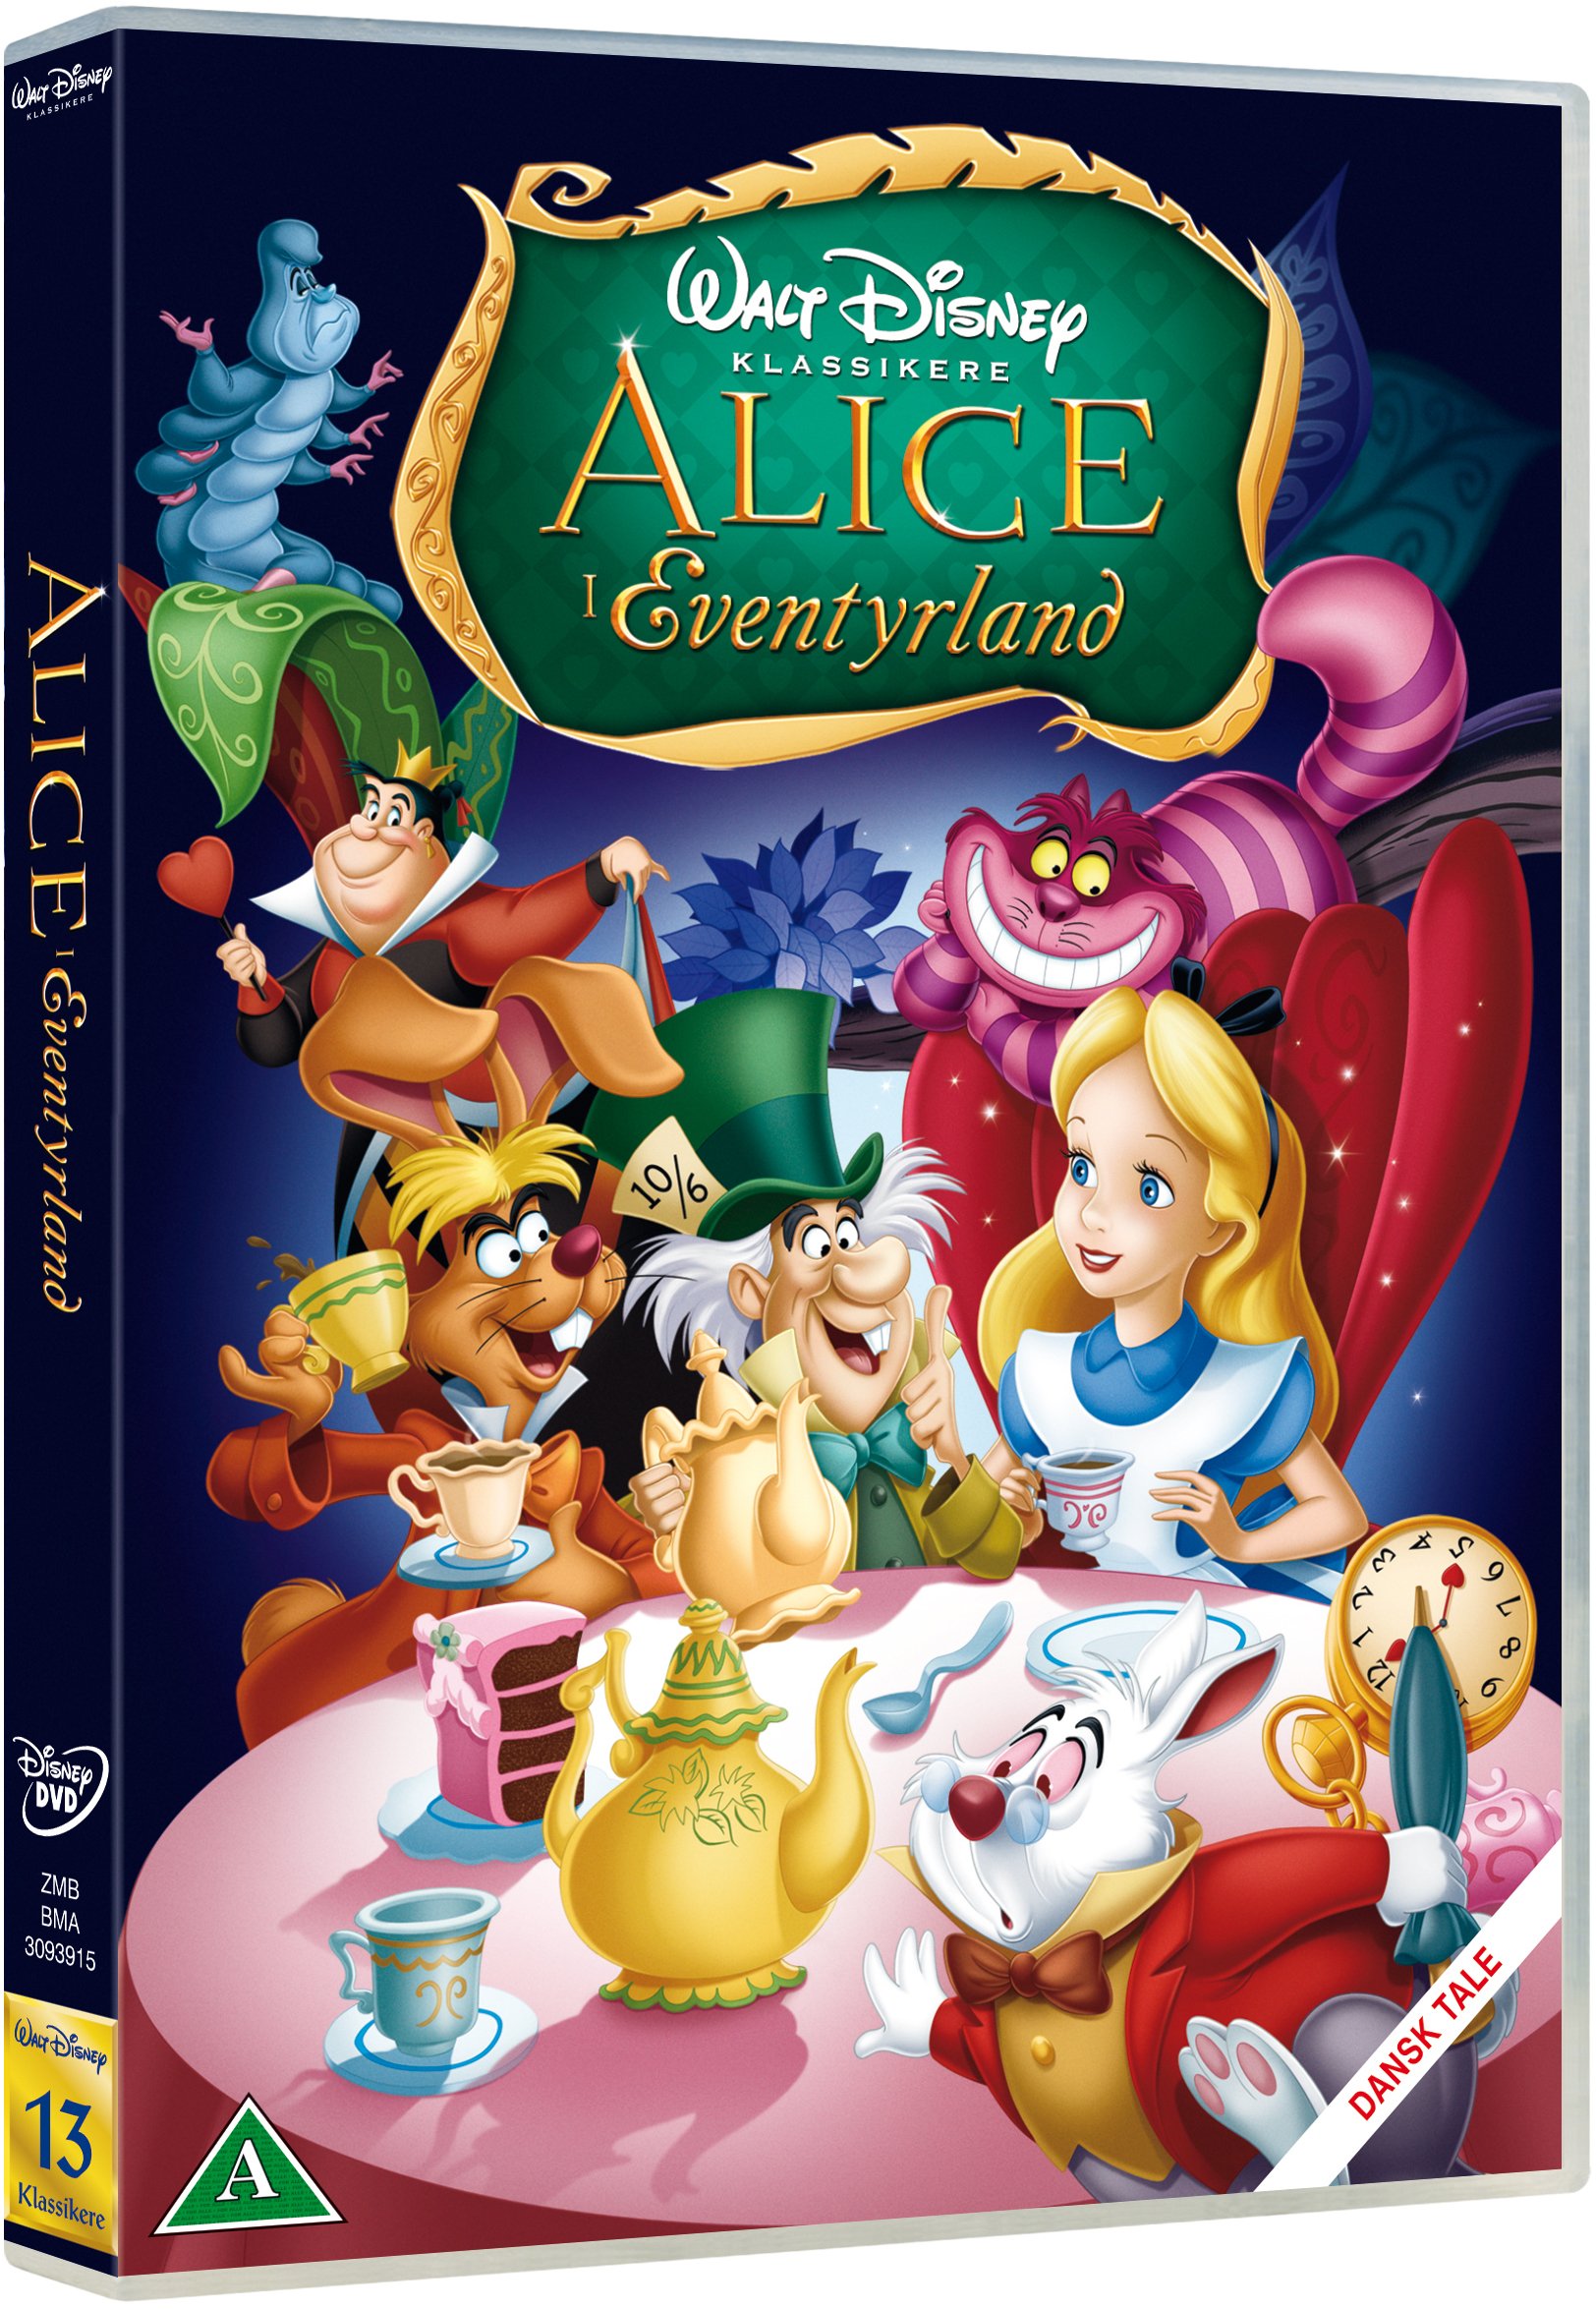 Køb Alice i eventyrland 60th Anniversary classic #13